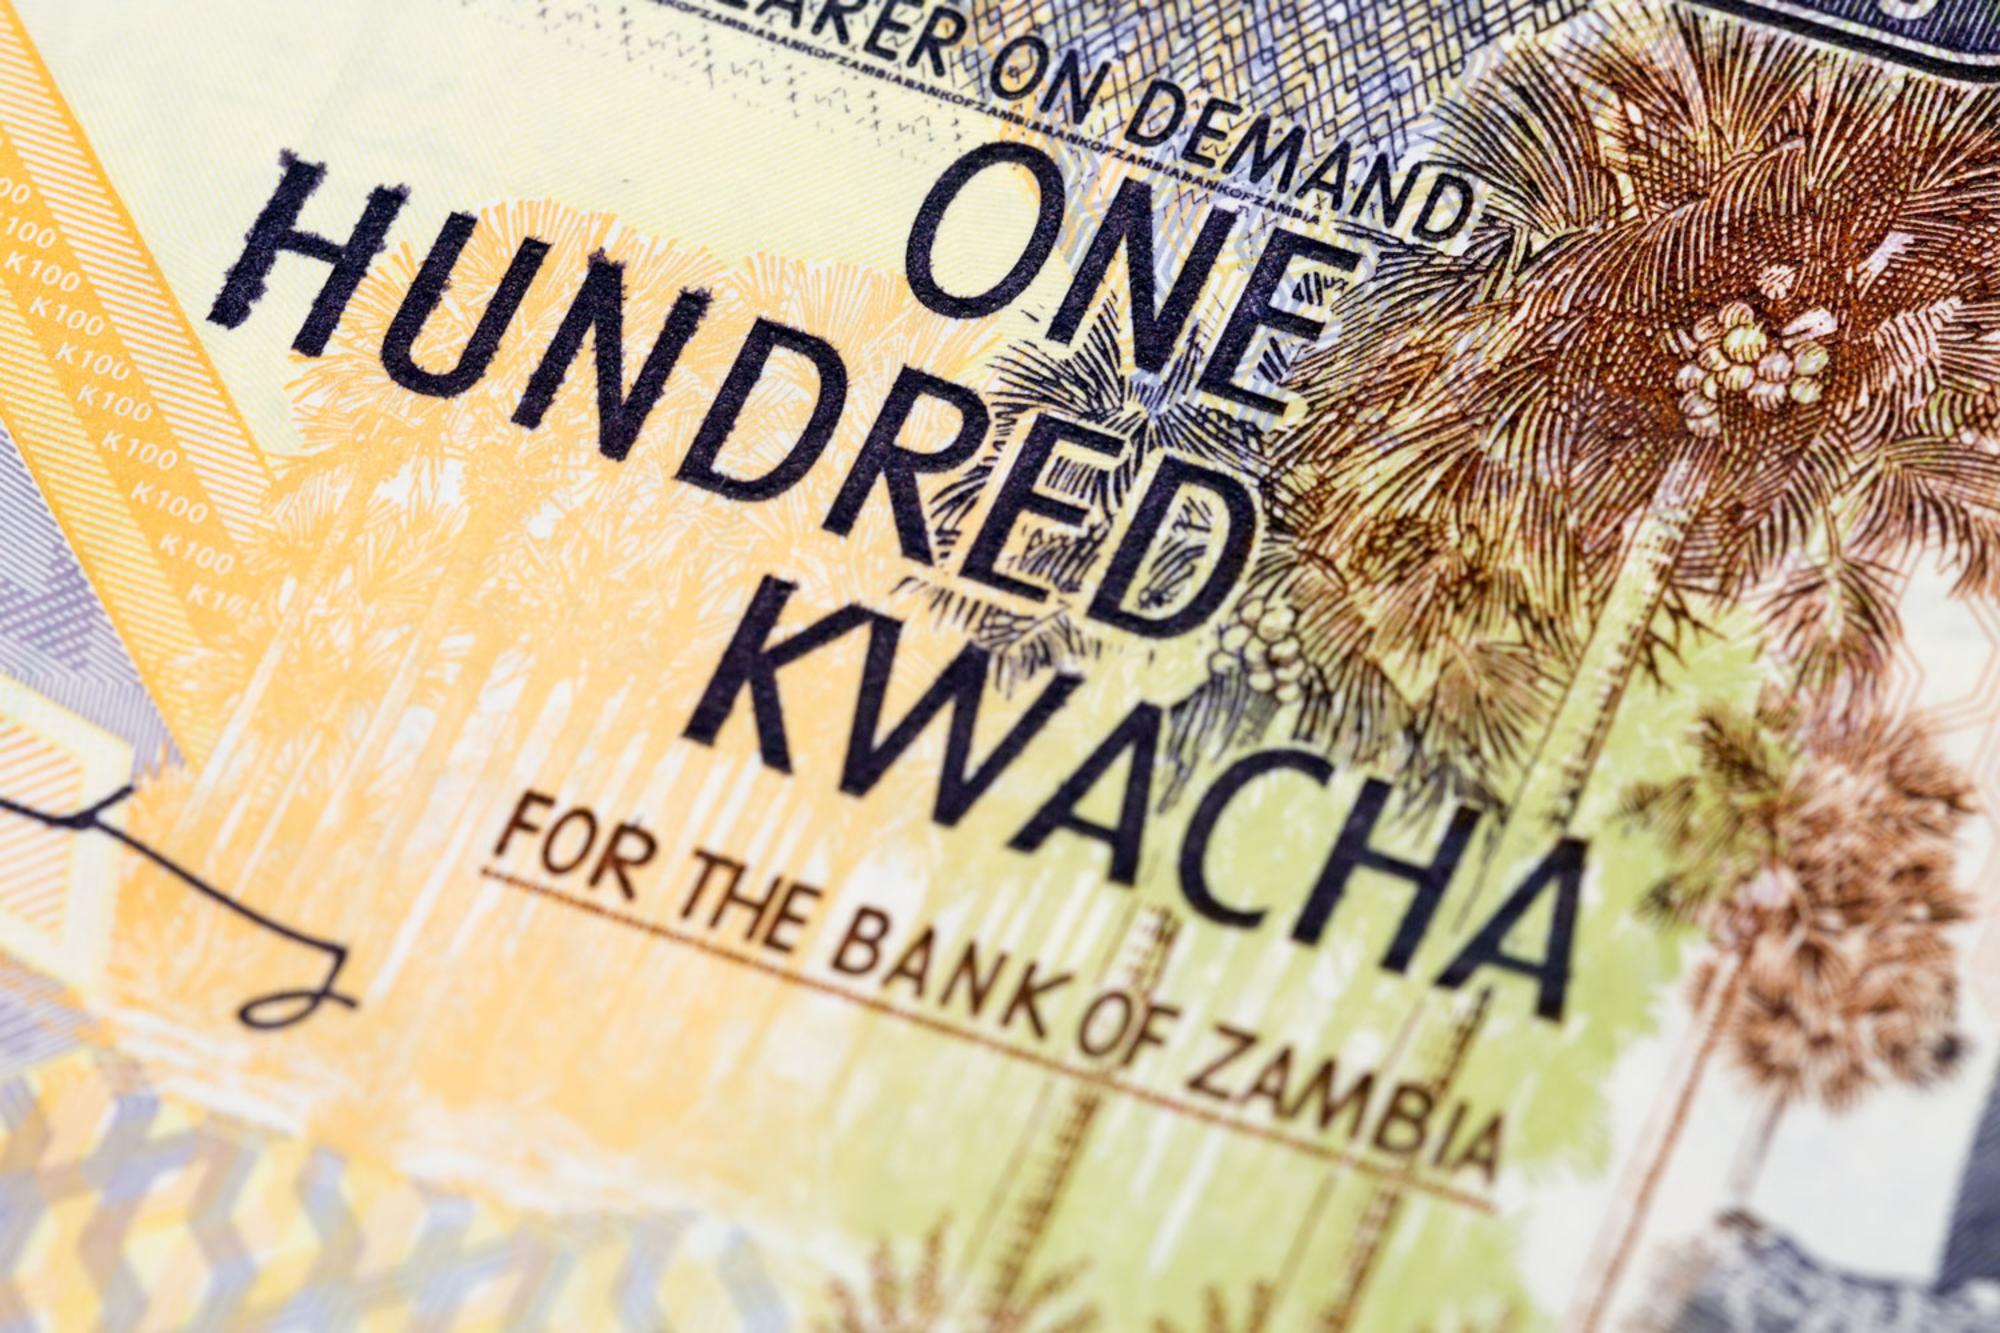 Zambia Fondos de Inversión Kwacha